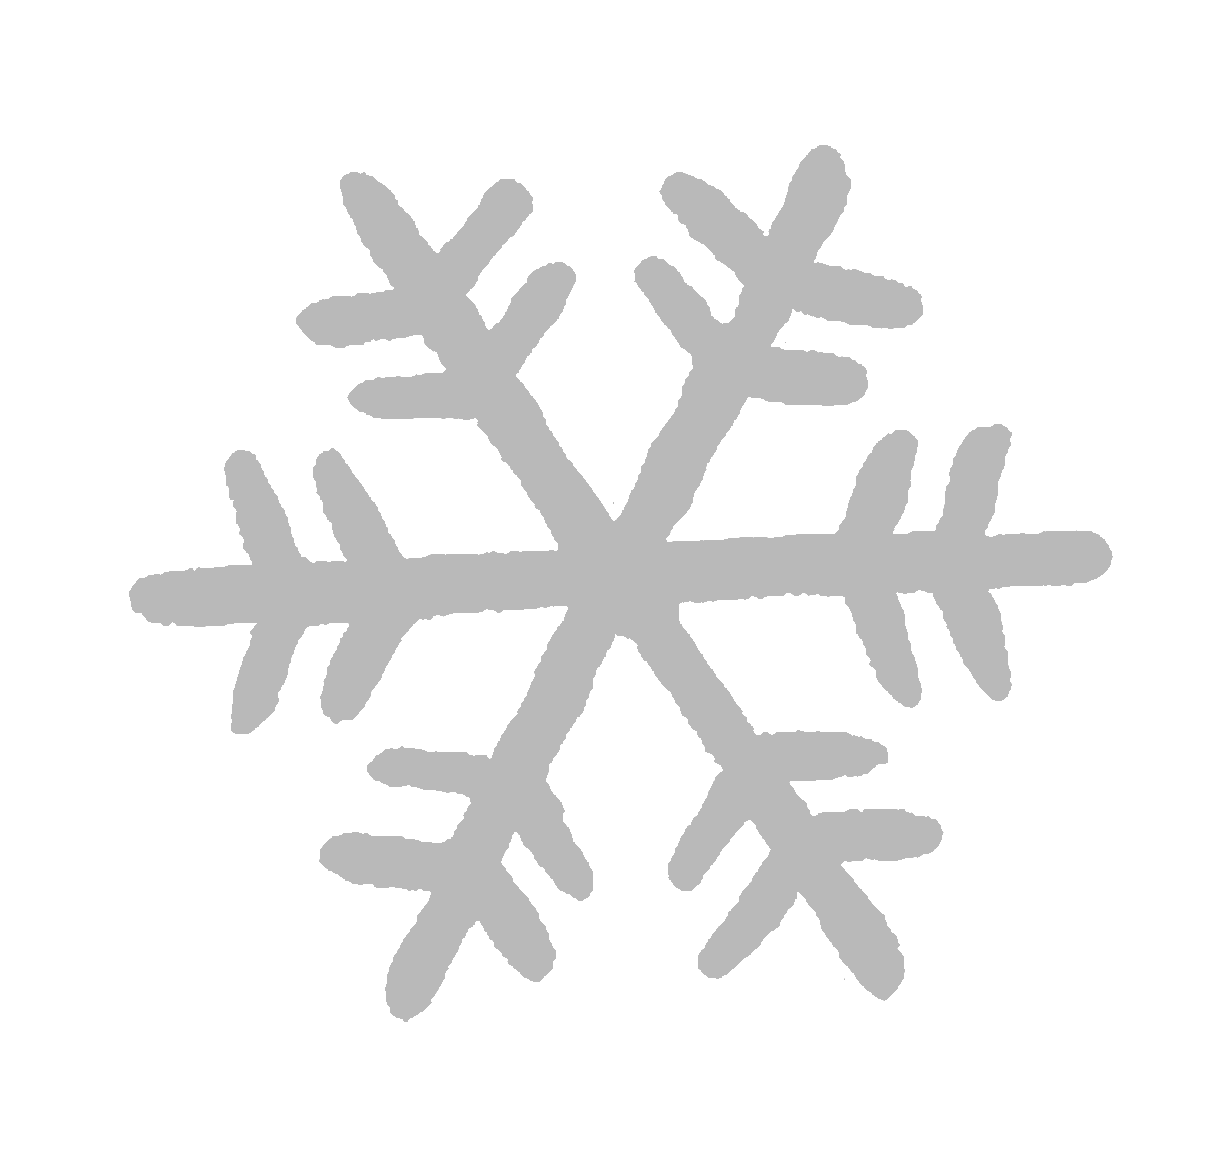 The Graphics Monarch: Digital Snowflake Silhouette Downloads 